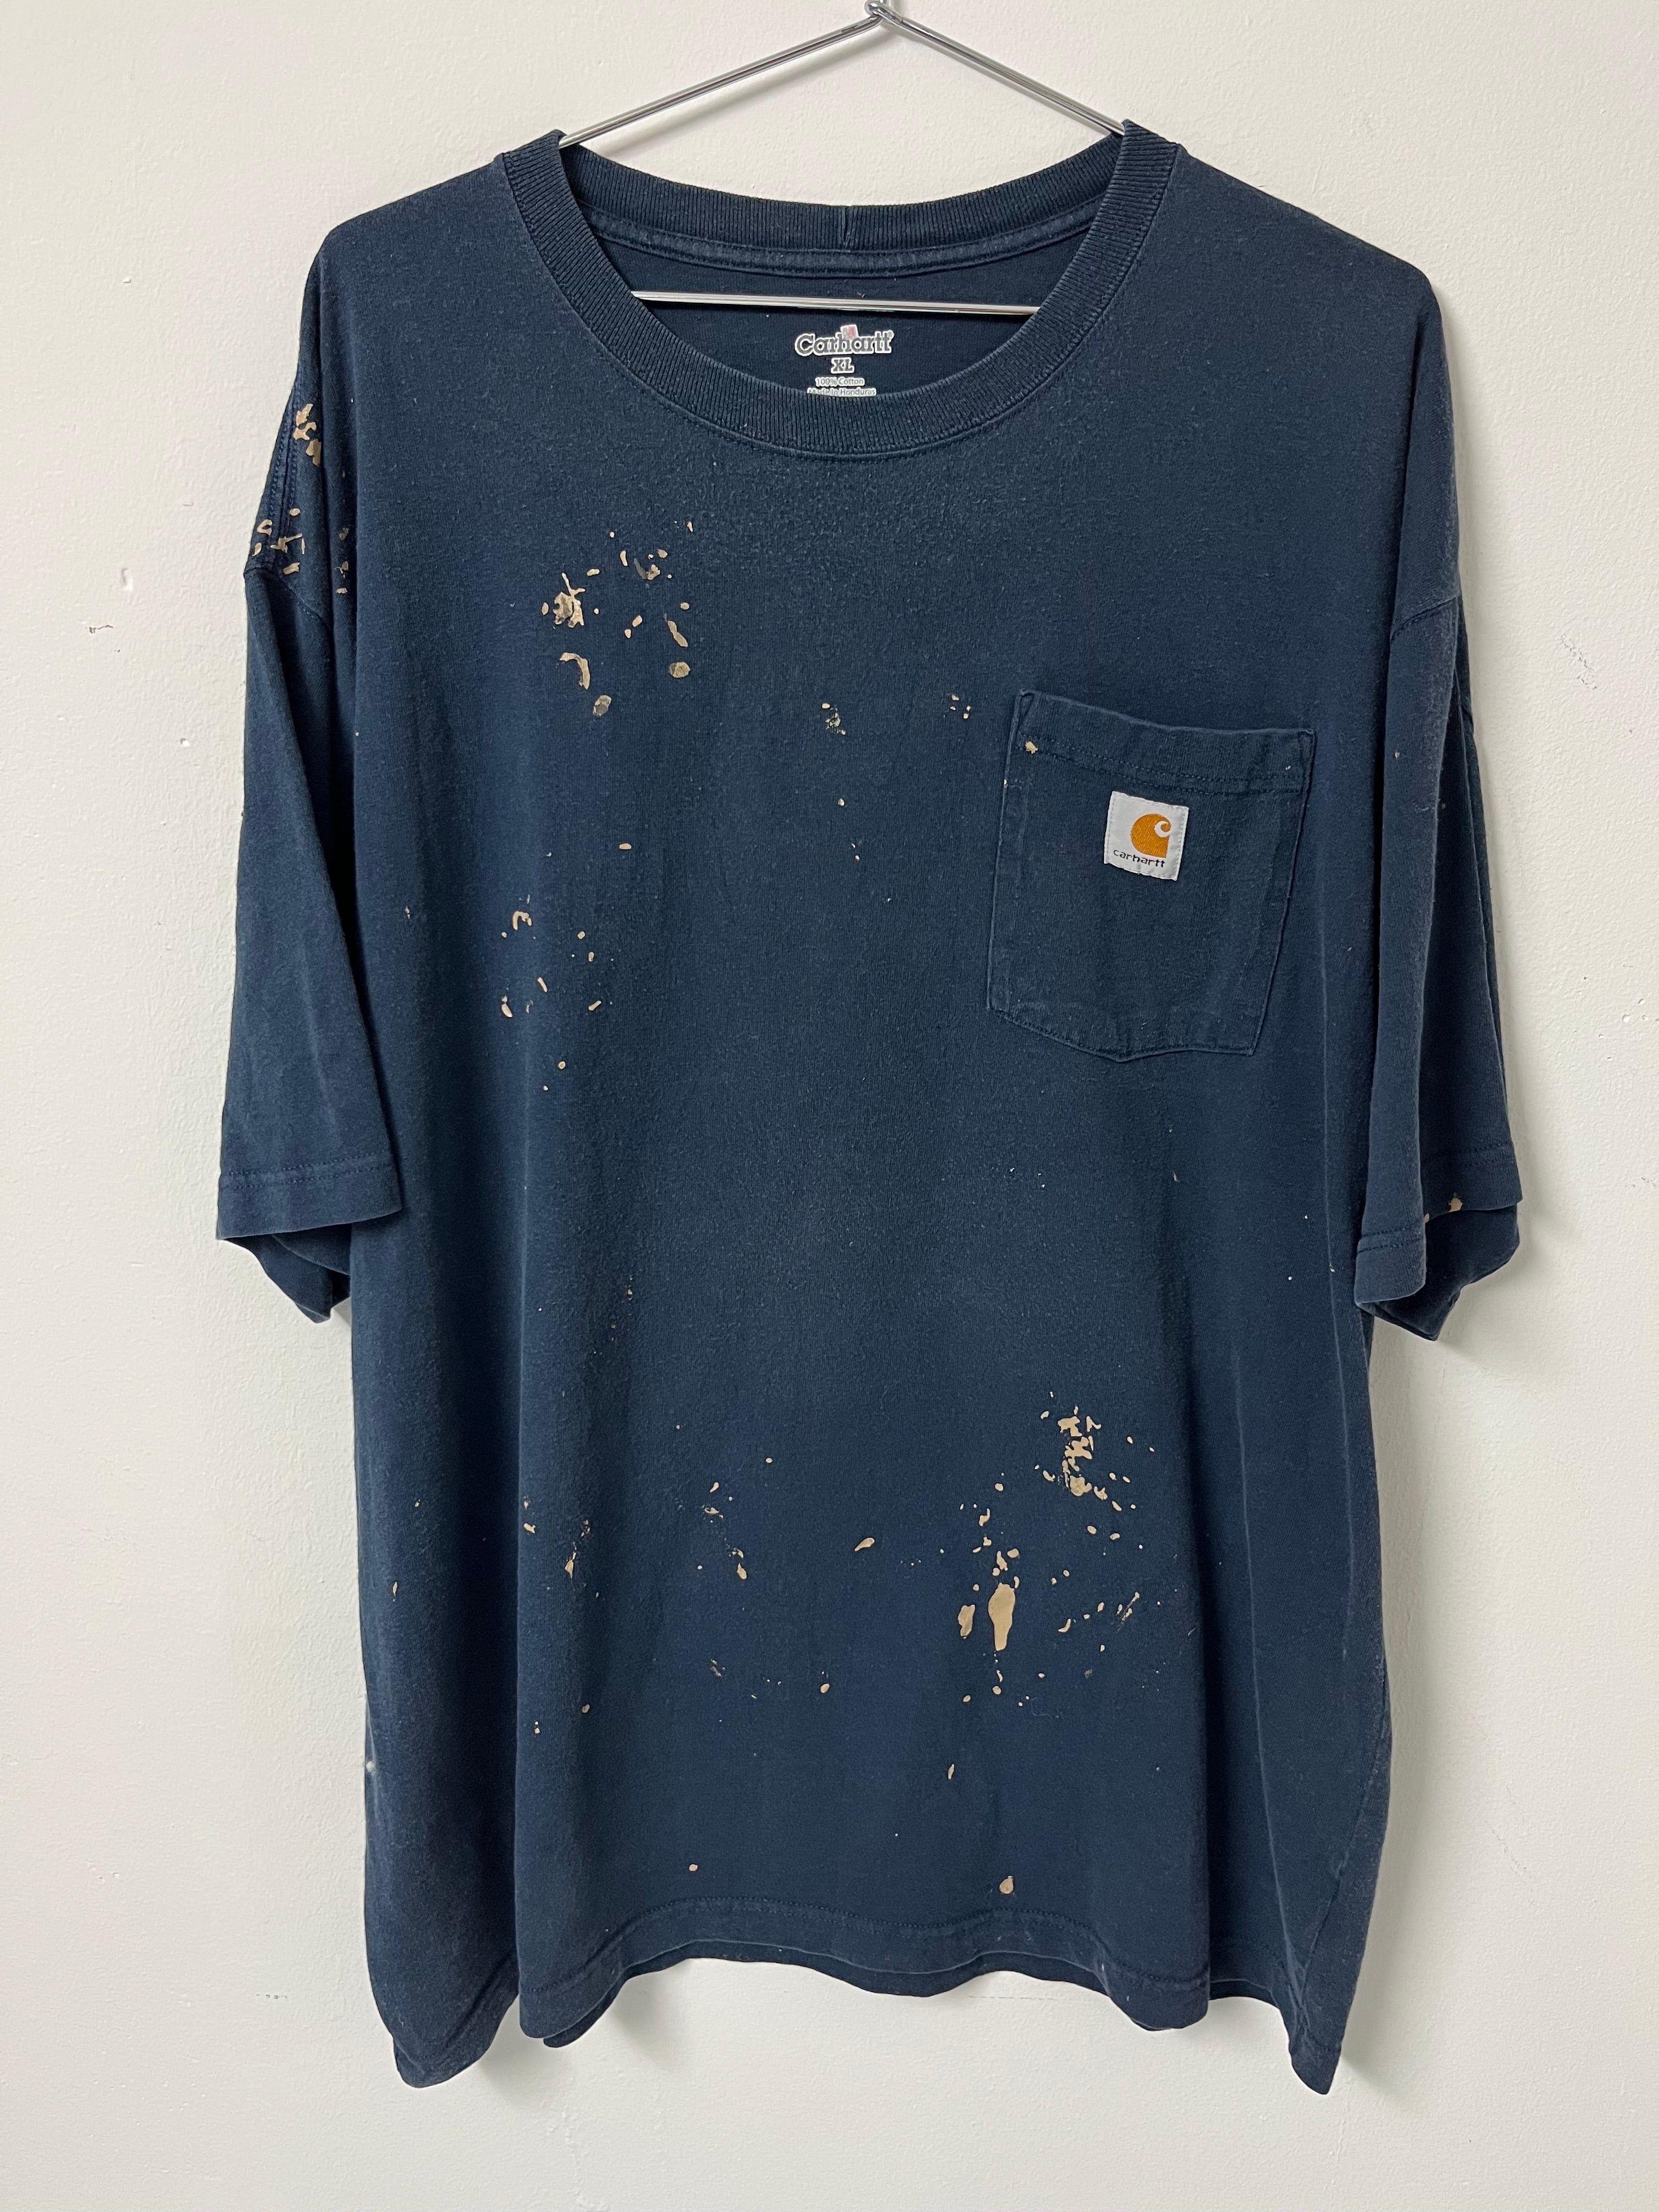 Vintage Carhartt Paint Distressed Pocket T-Shirt - Faded Navy - XL/XXL